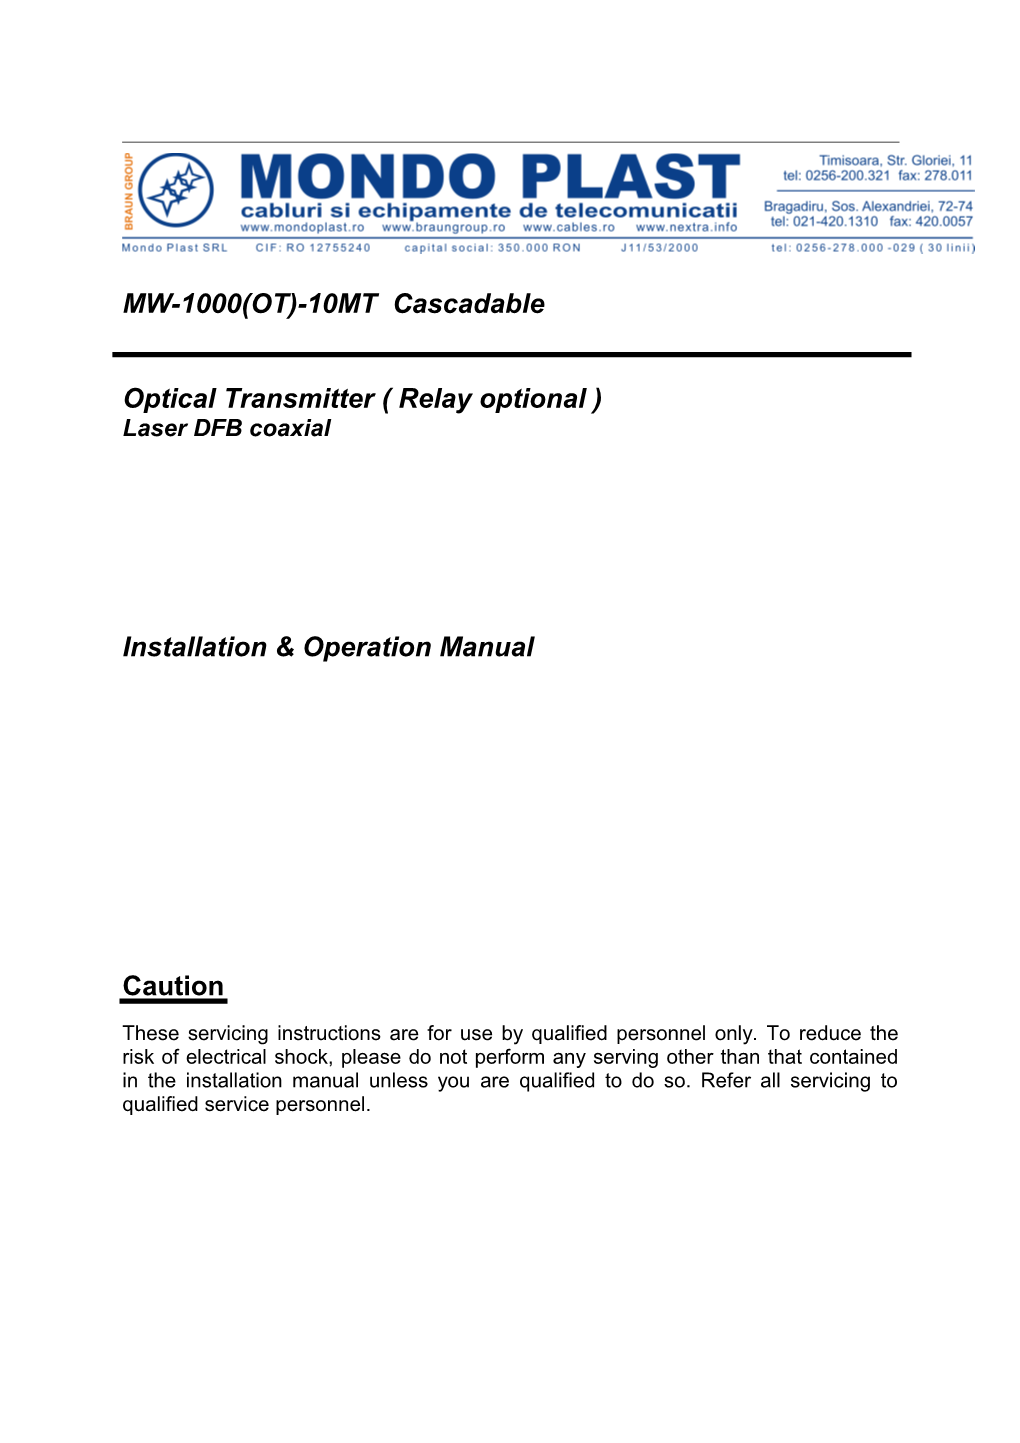 Optical Transmitter( Relay Optional )